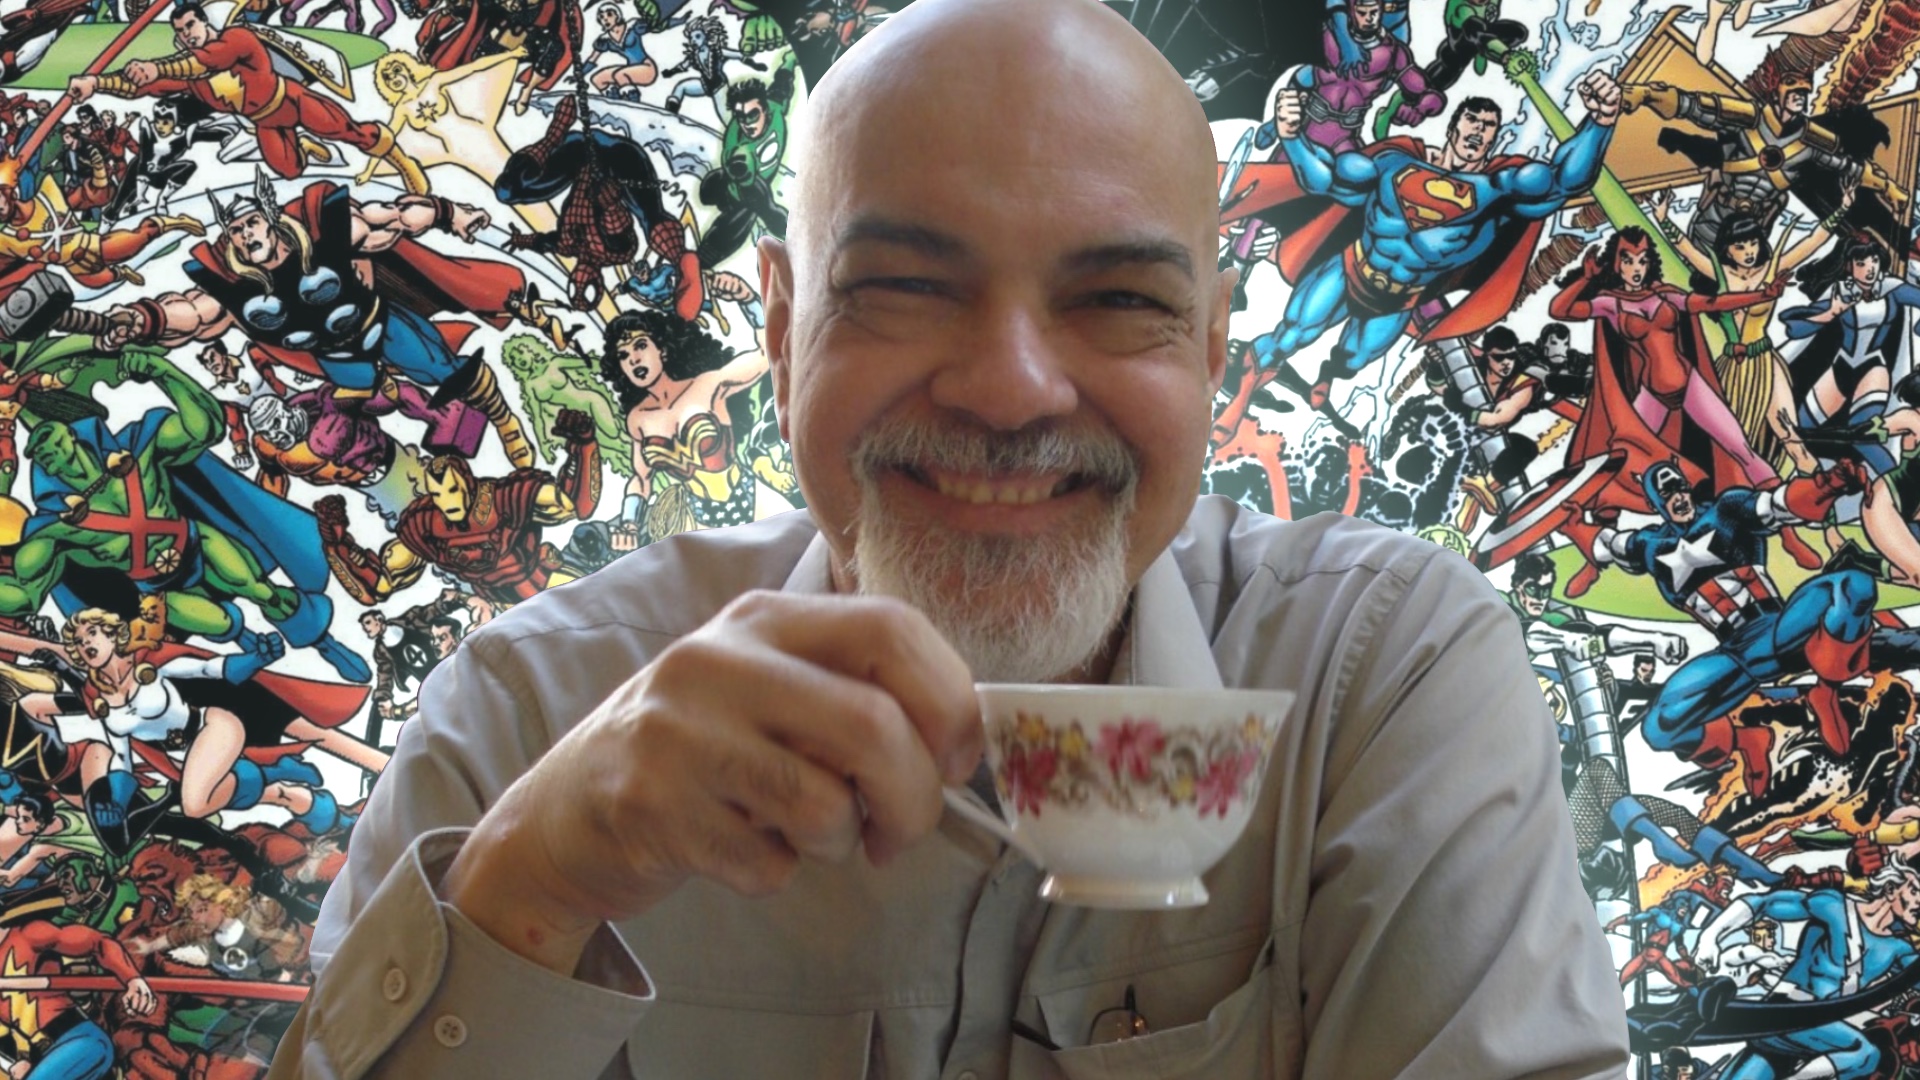 George Pérez is the definitive DC and Marvel superhero artist